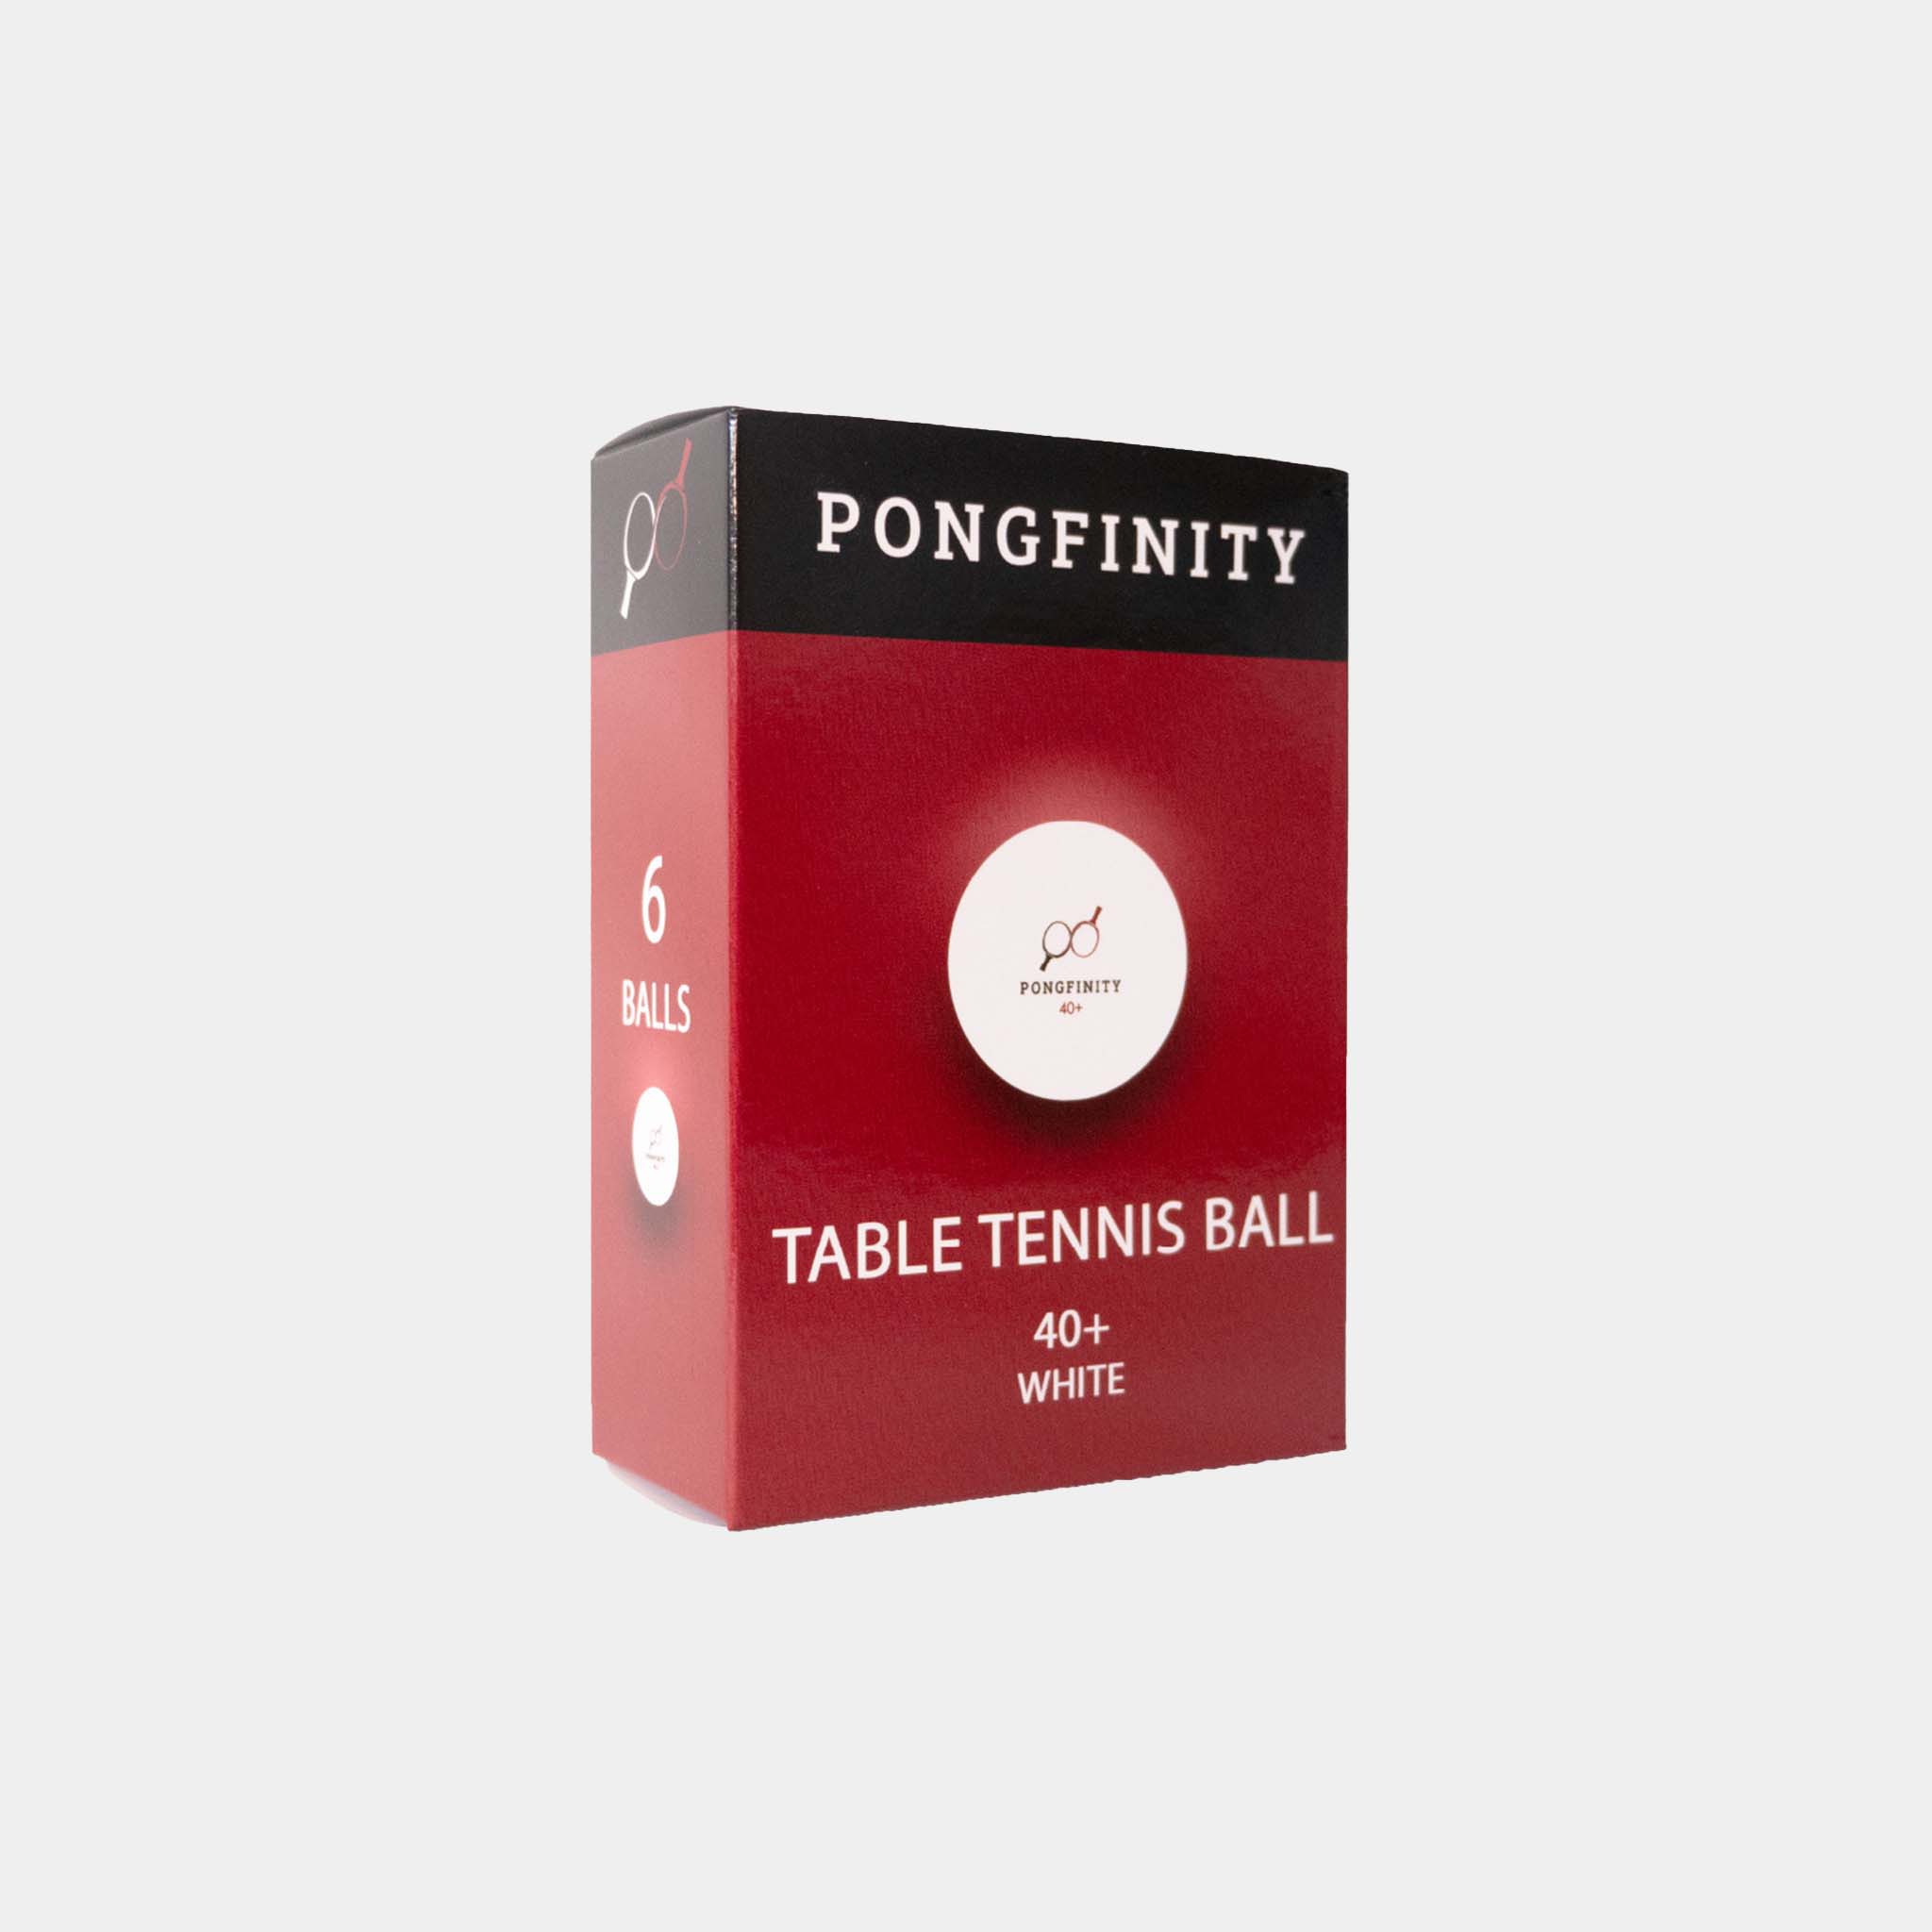 Pongfinity I Trick Shots, Merch, Ping Pong Equipment, Games